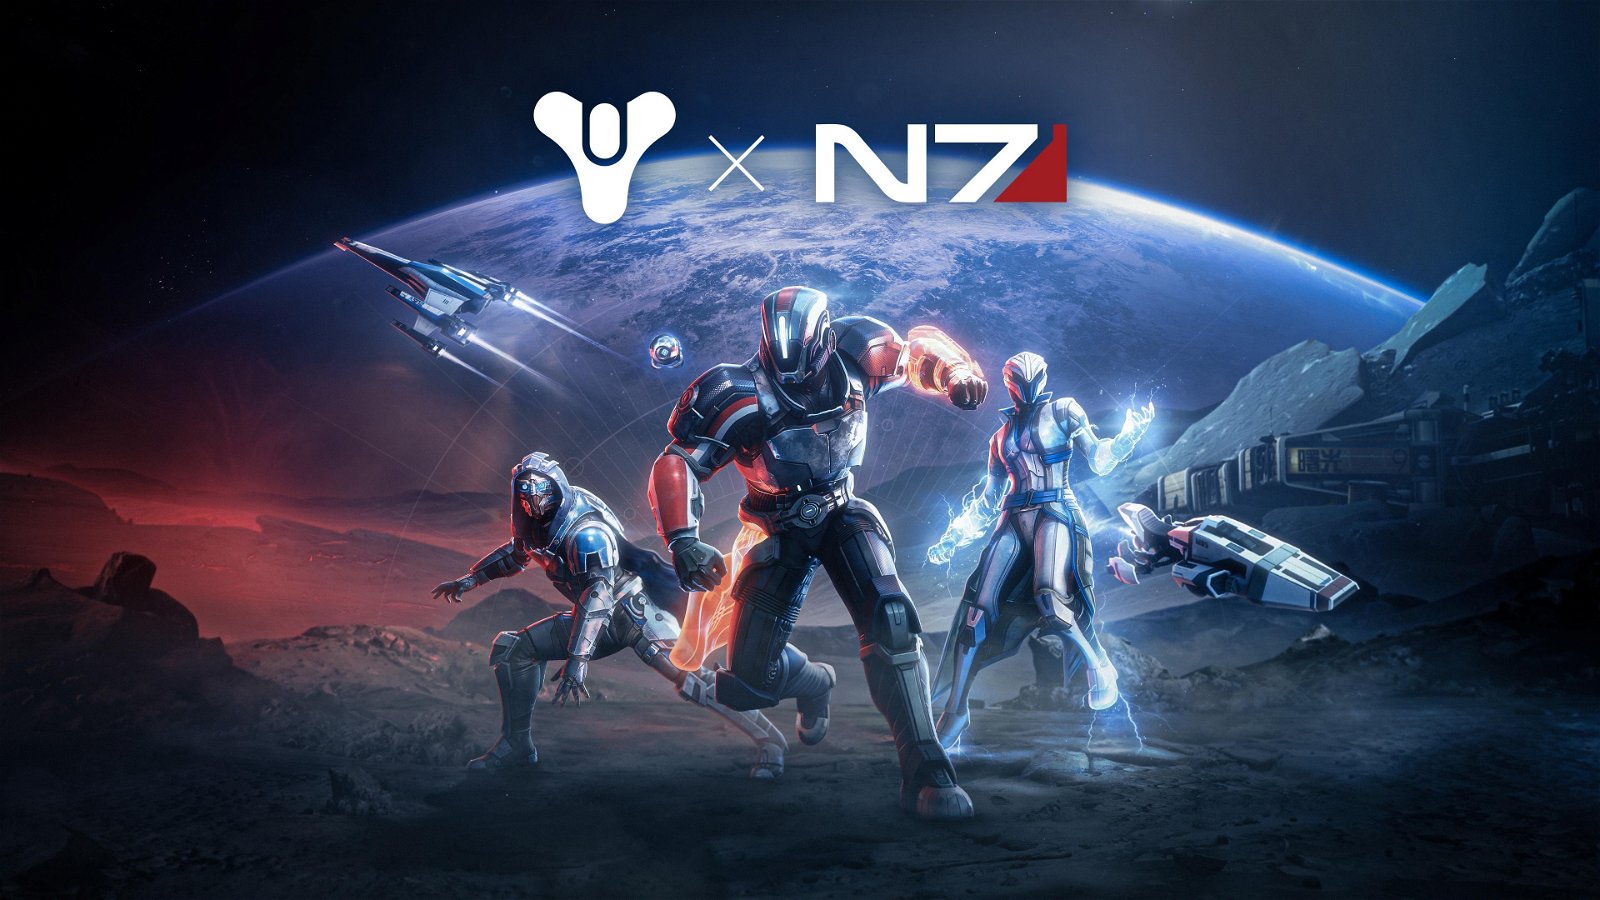 Se Mass Effect vi manca dovreste giocare Destiny 2